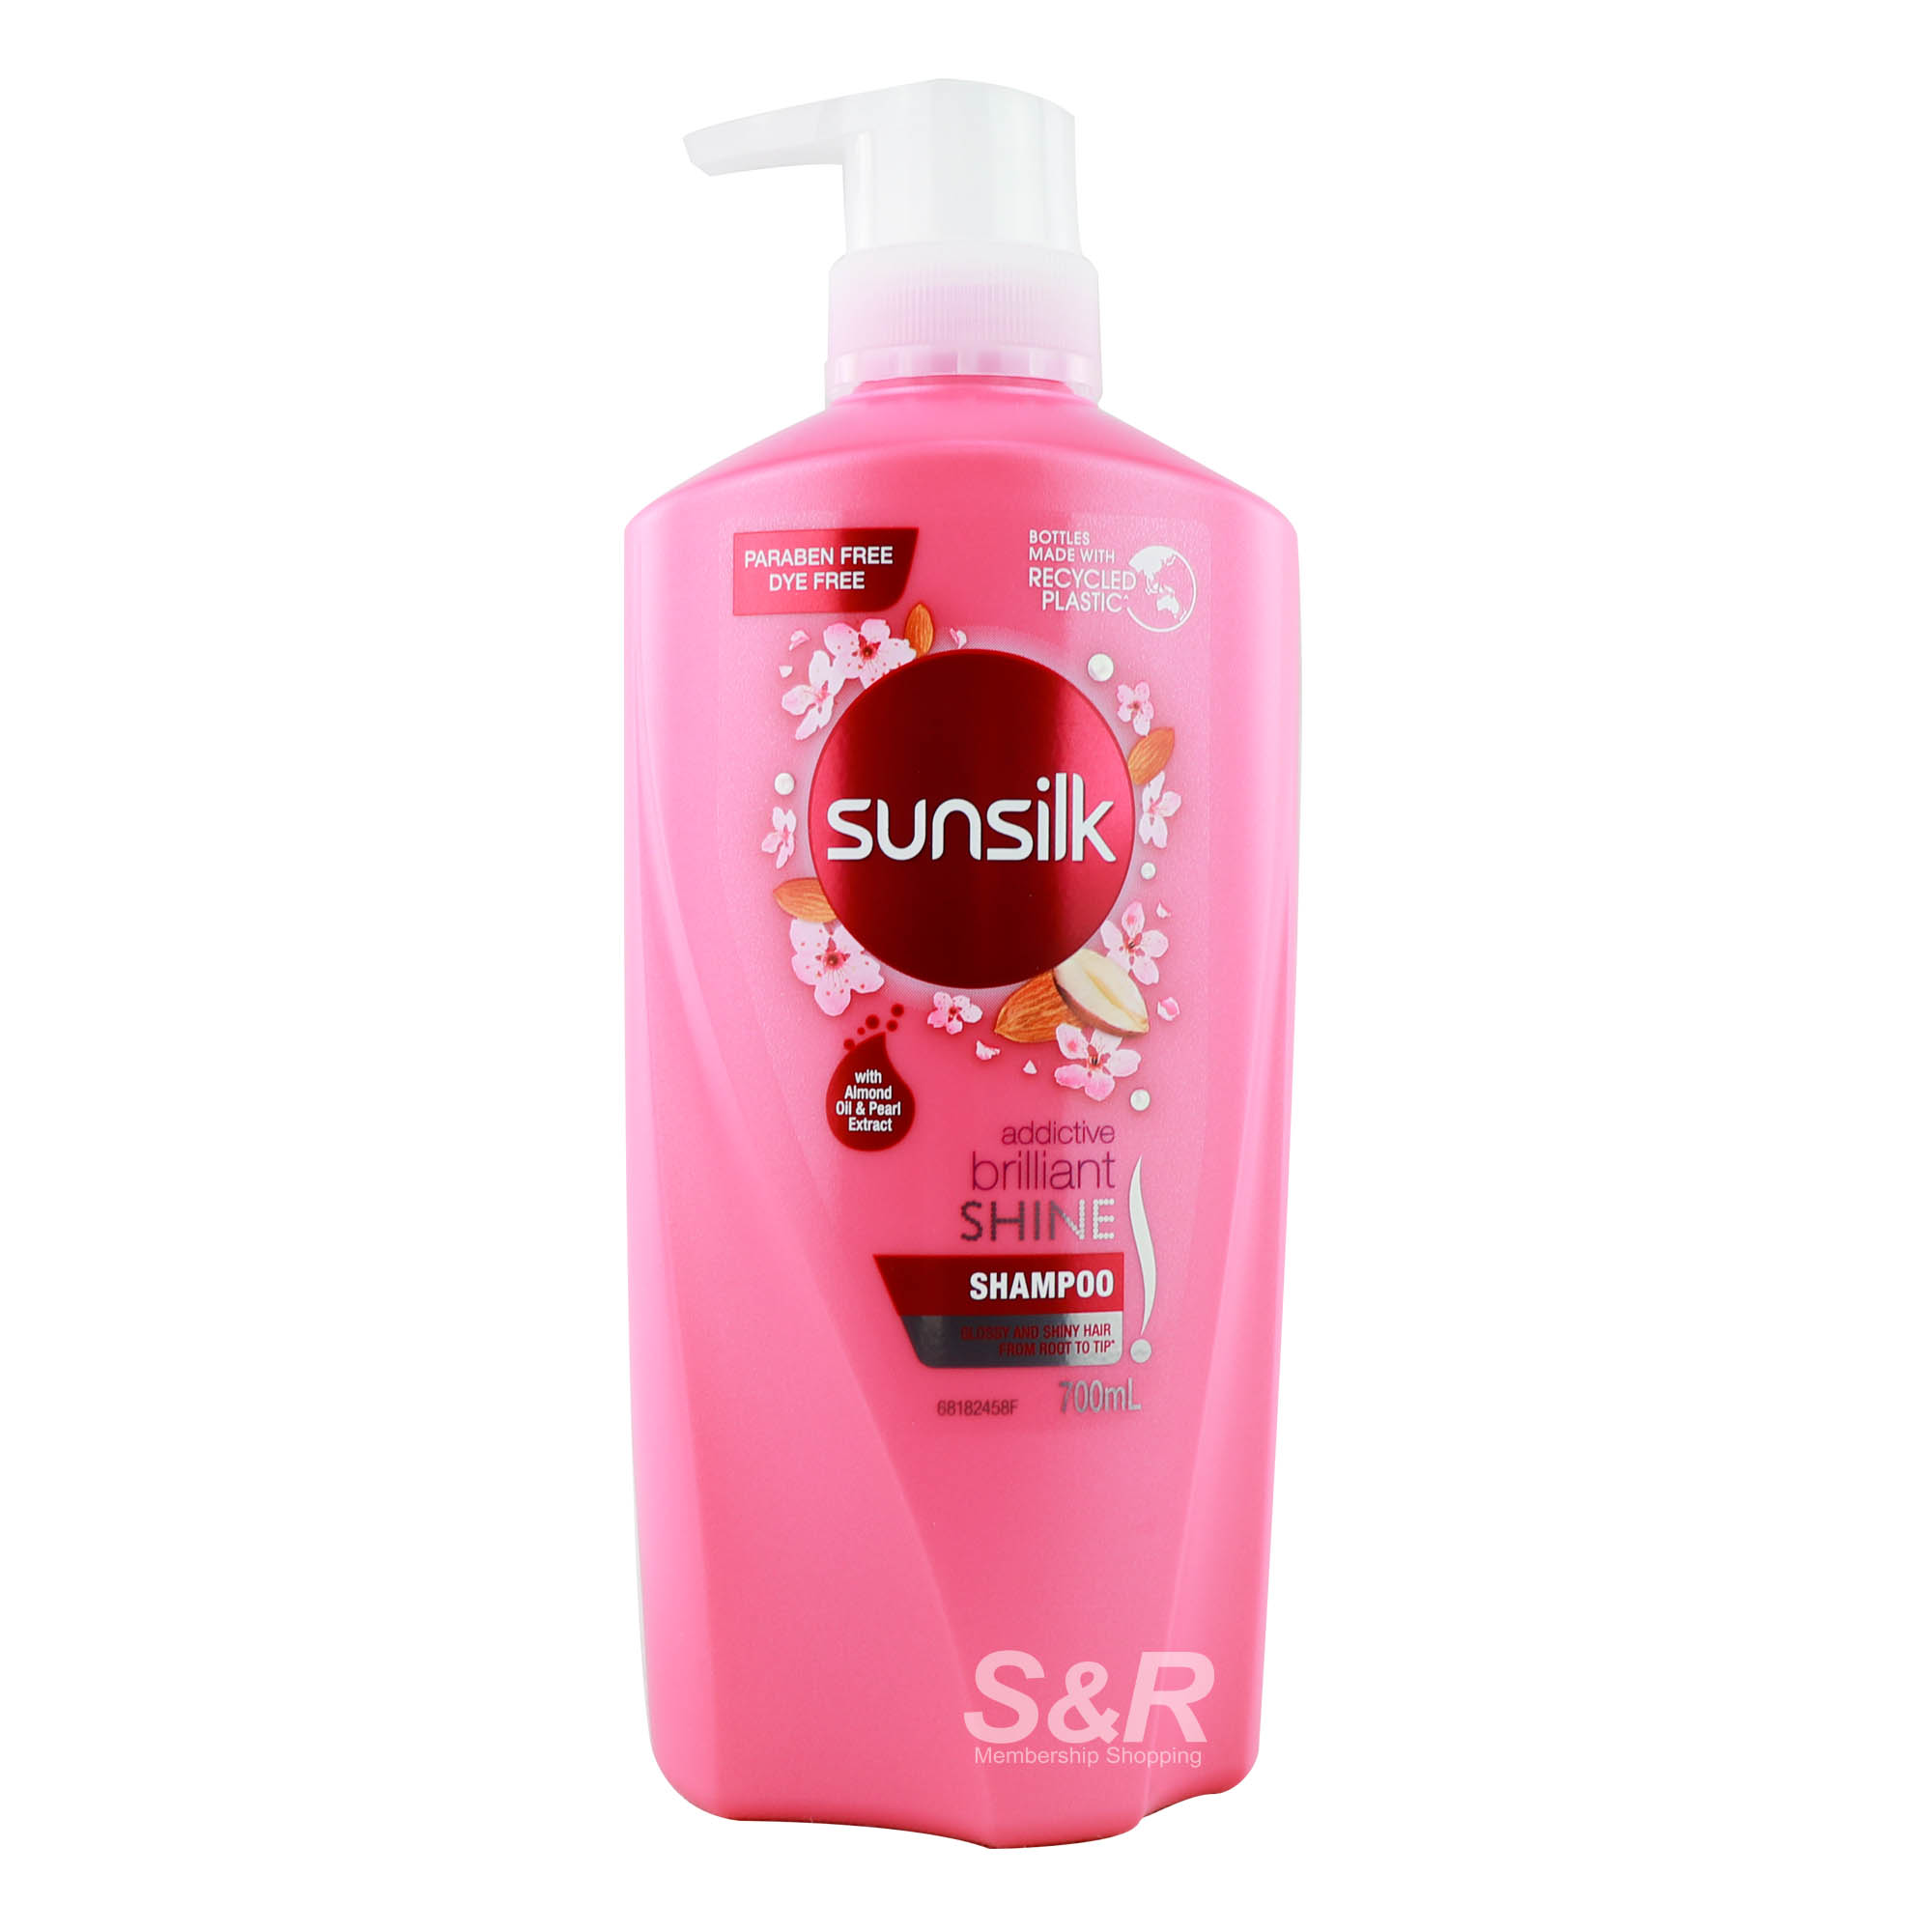 Sunsilk Addictive Brilliant Shine Shampoo 700mL